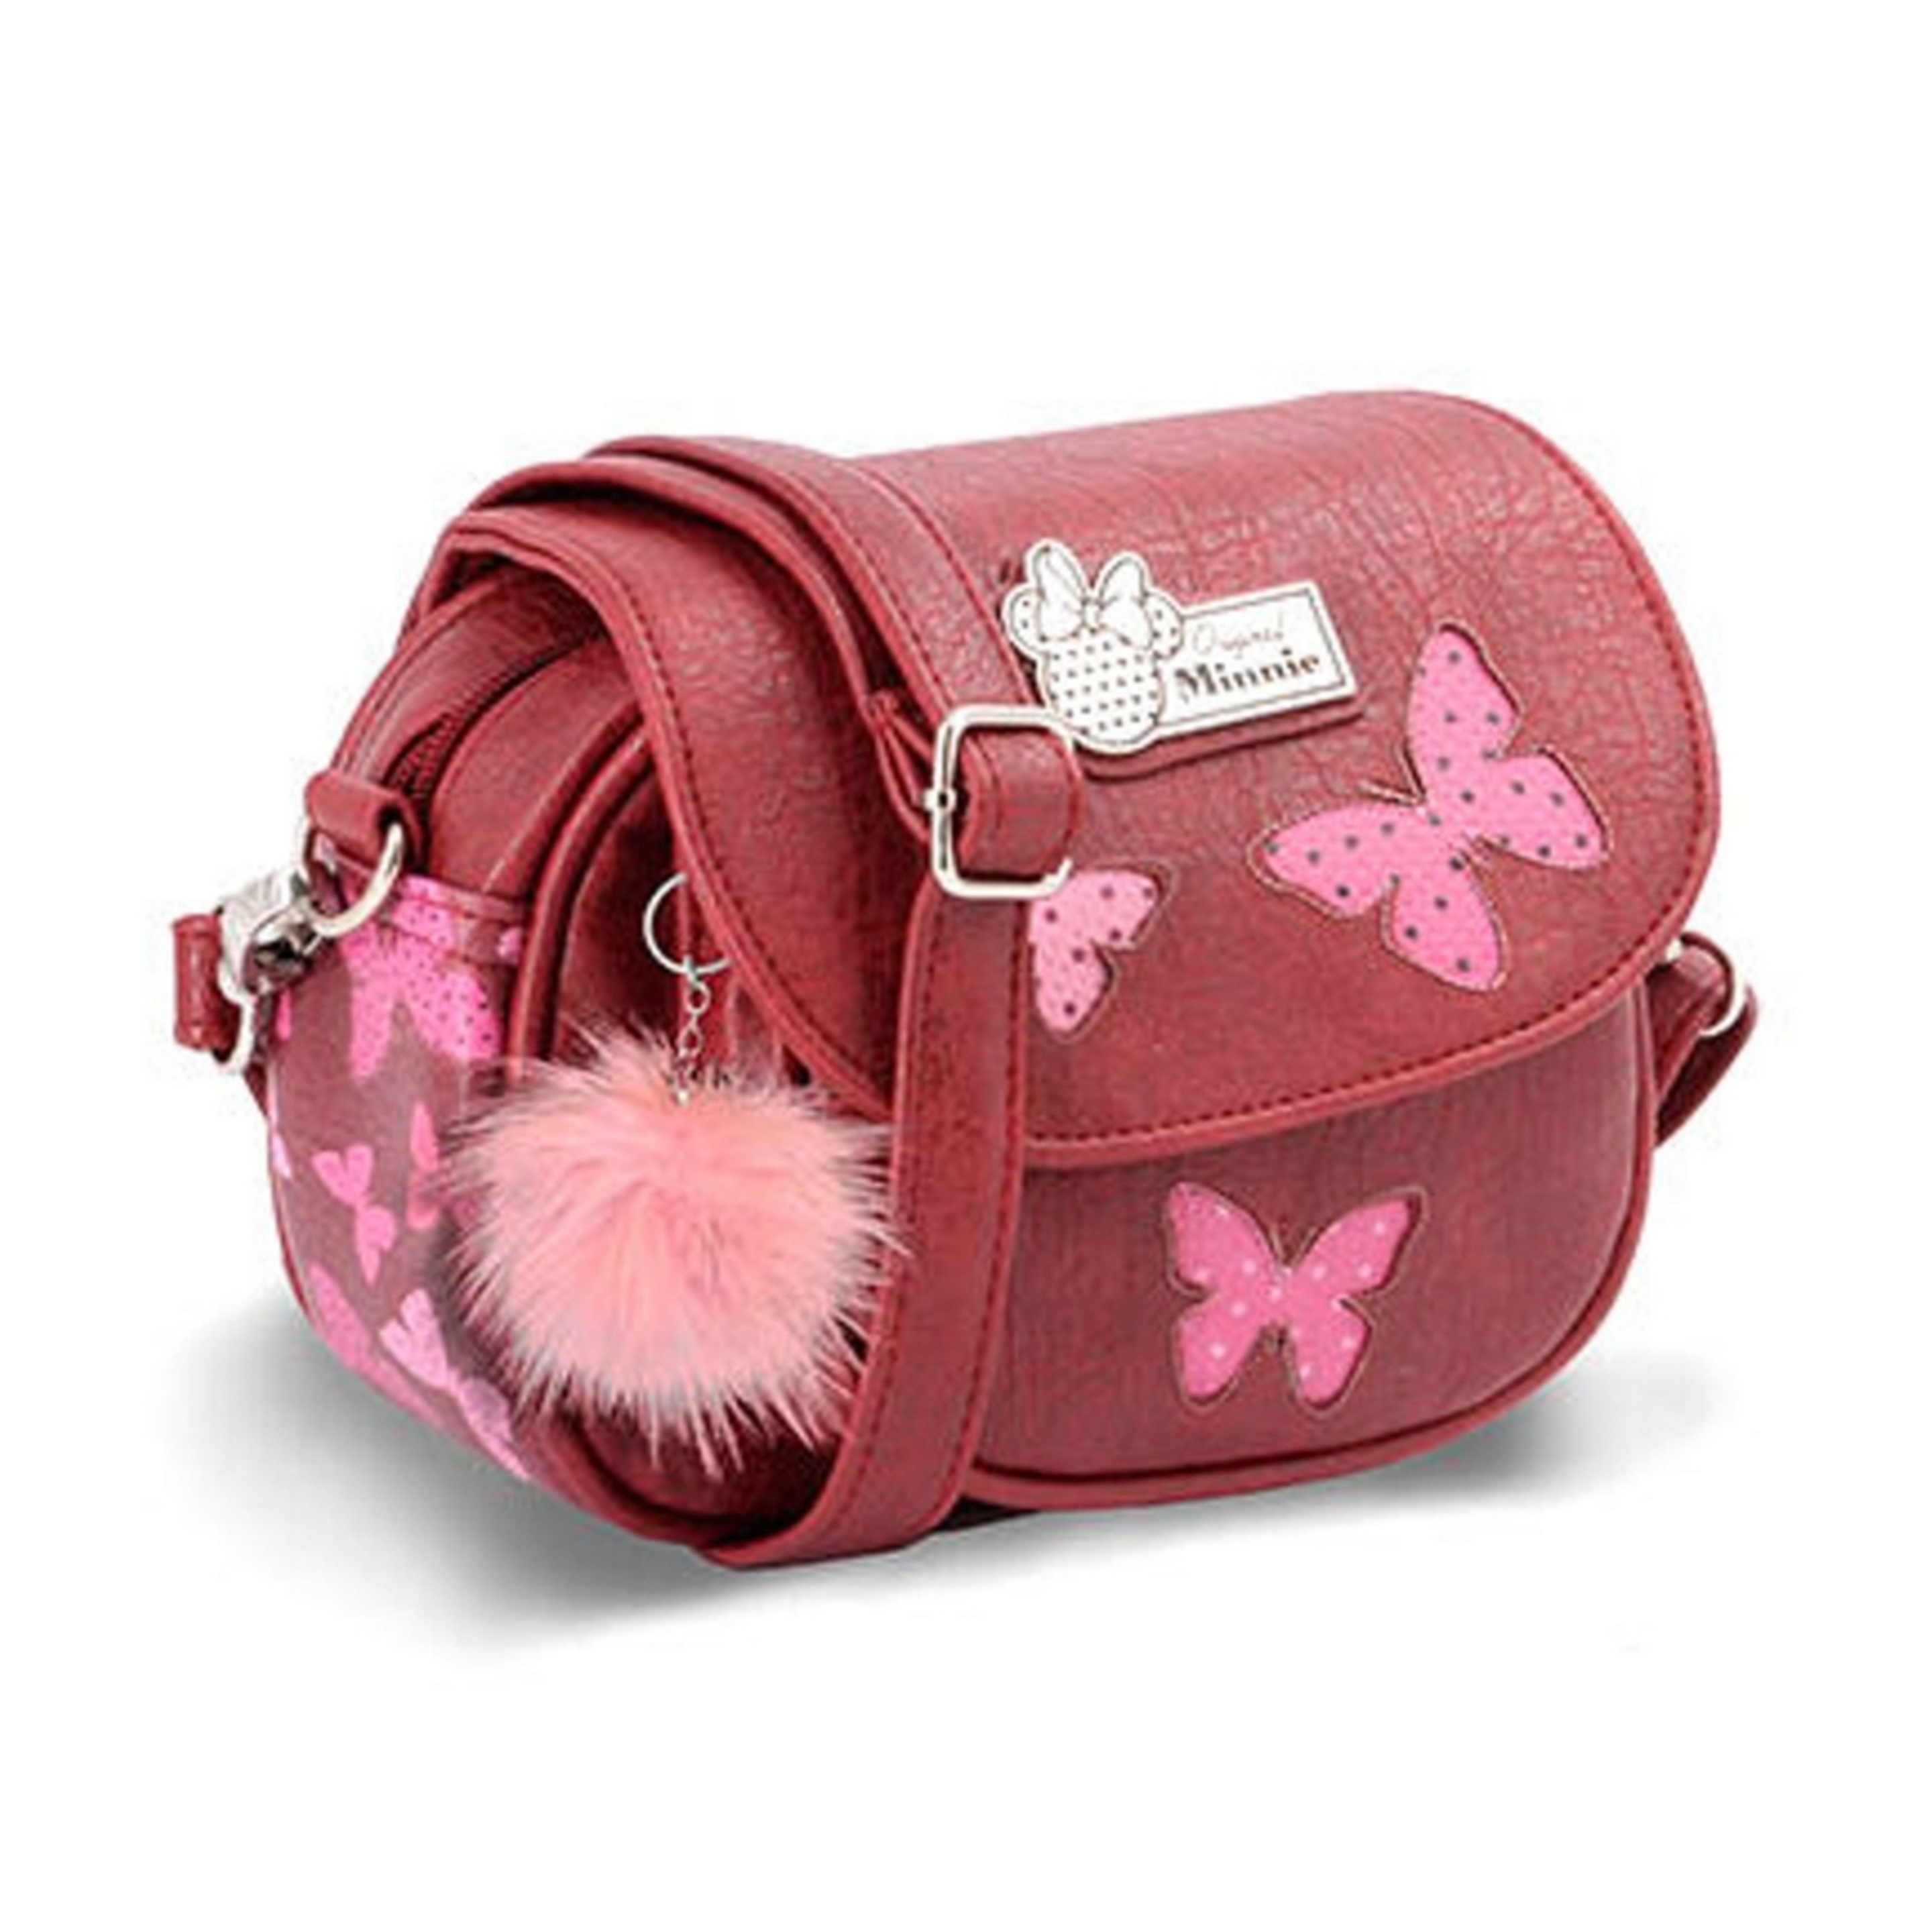 Minnie Mouse Banger Bag